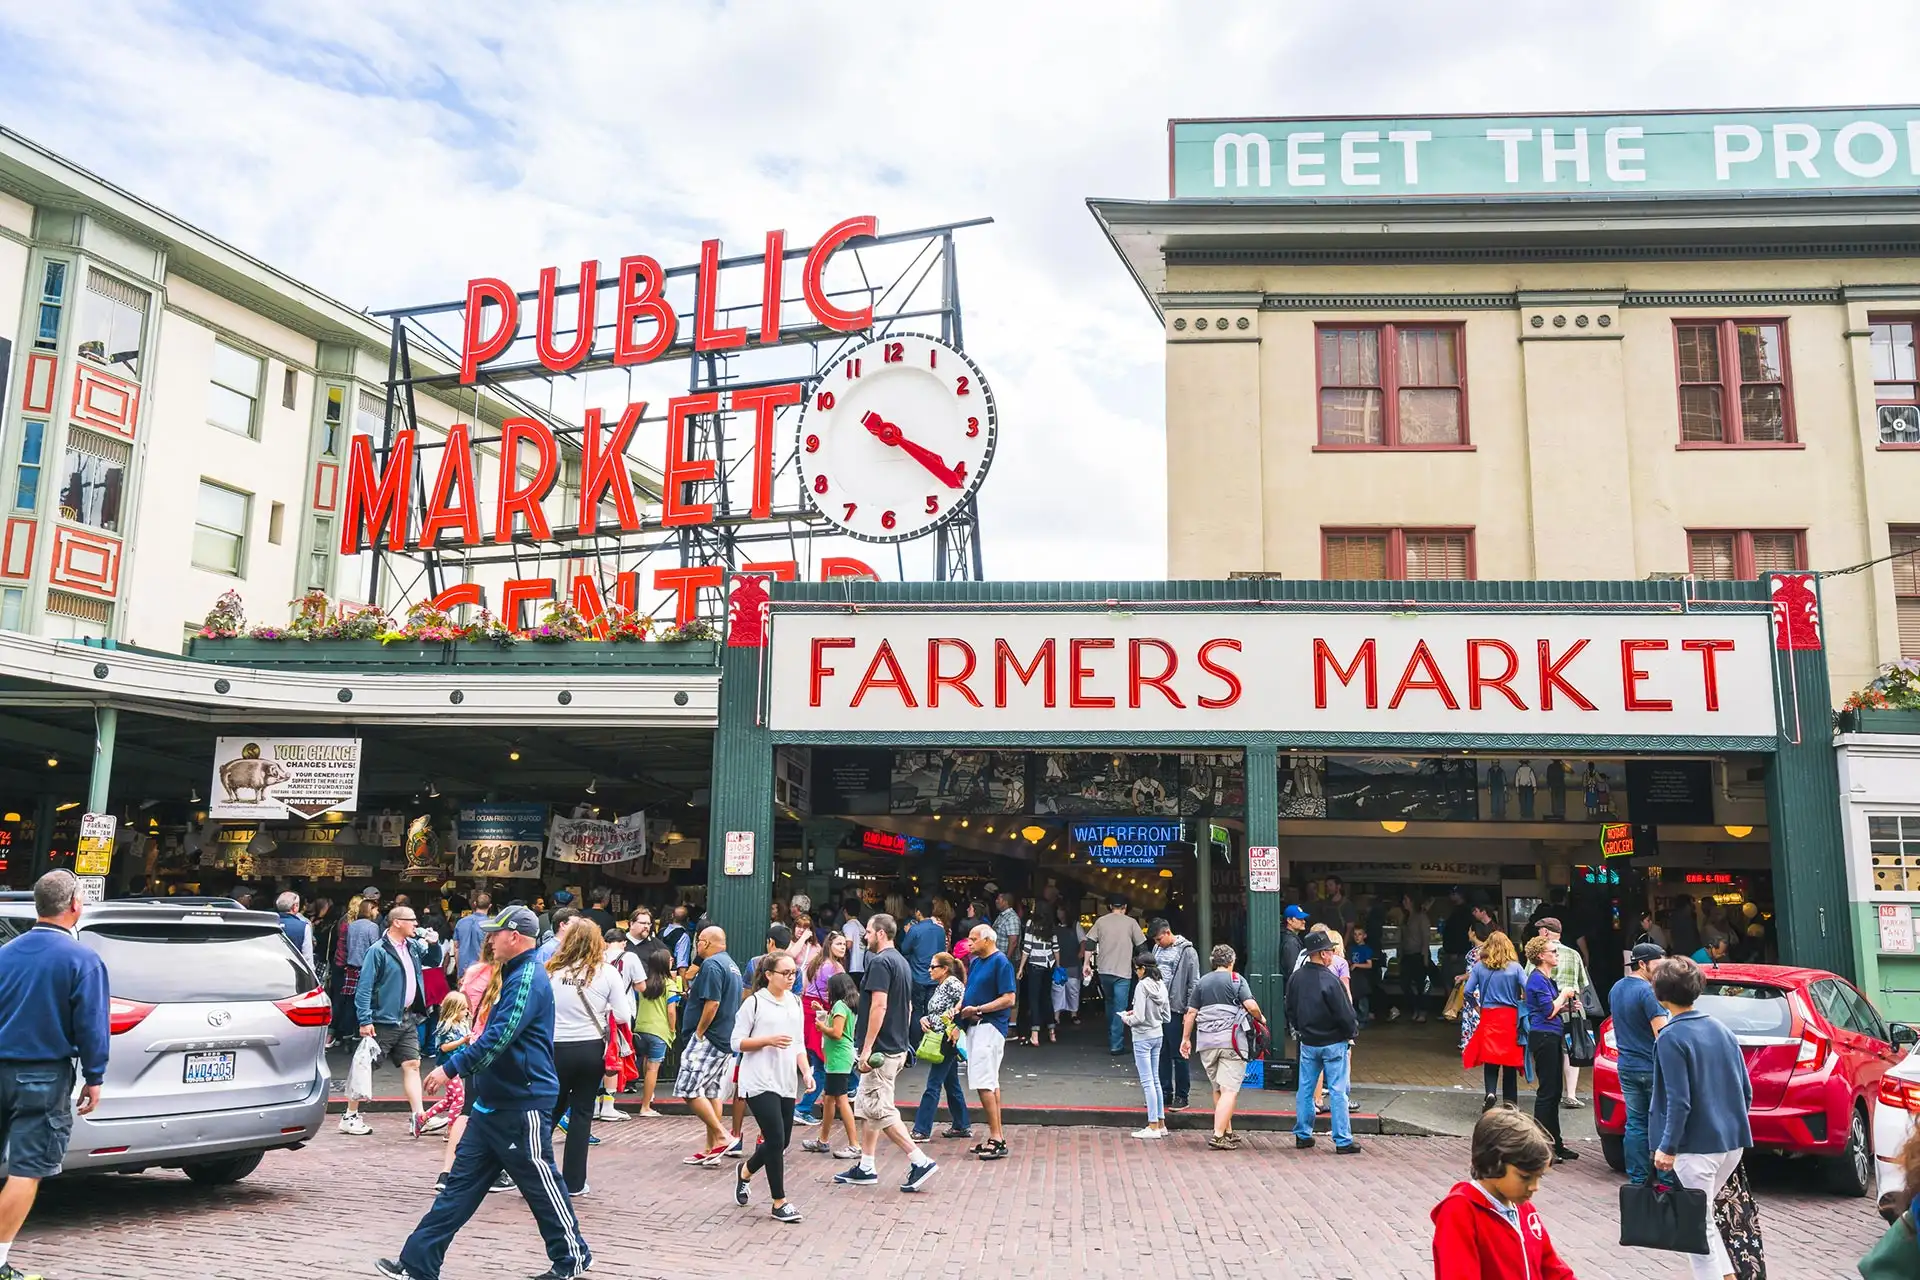 Pike Place Market in Seattle, Washington.